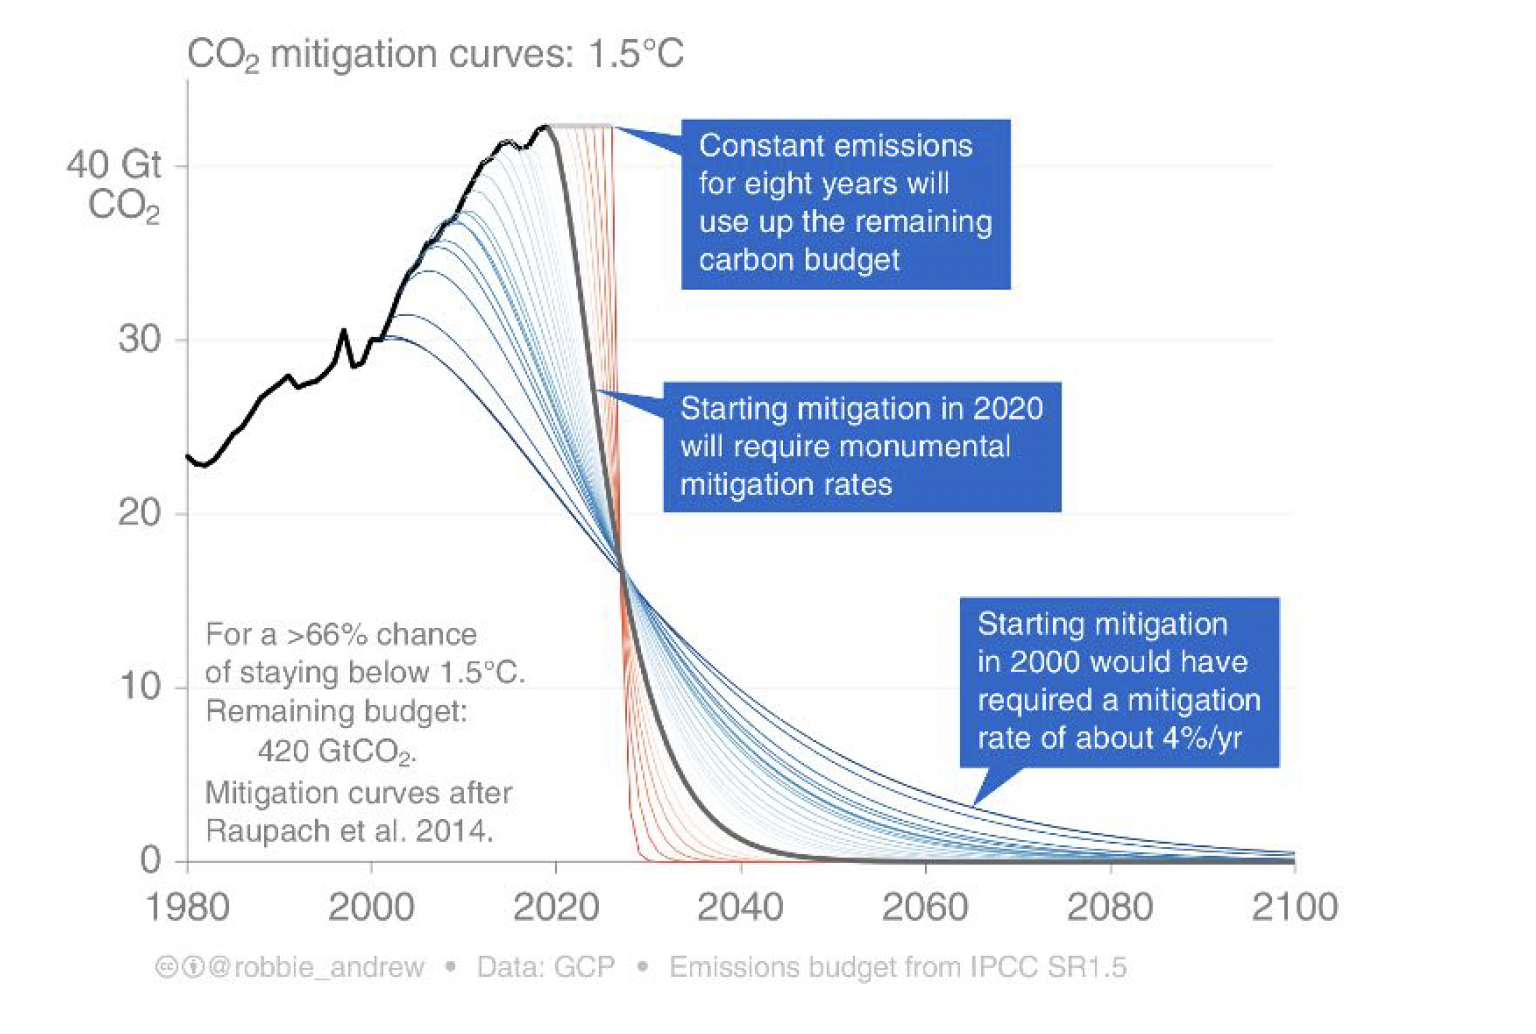 CO2 mitigation curves 1.5 degrees C